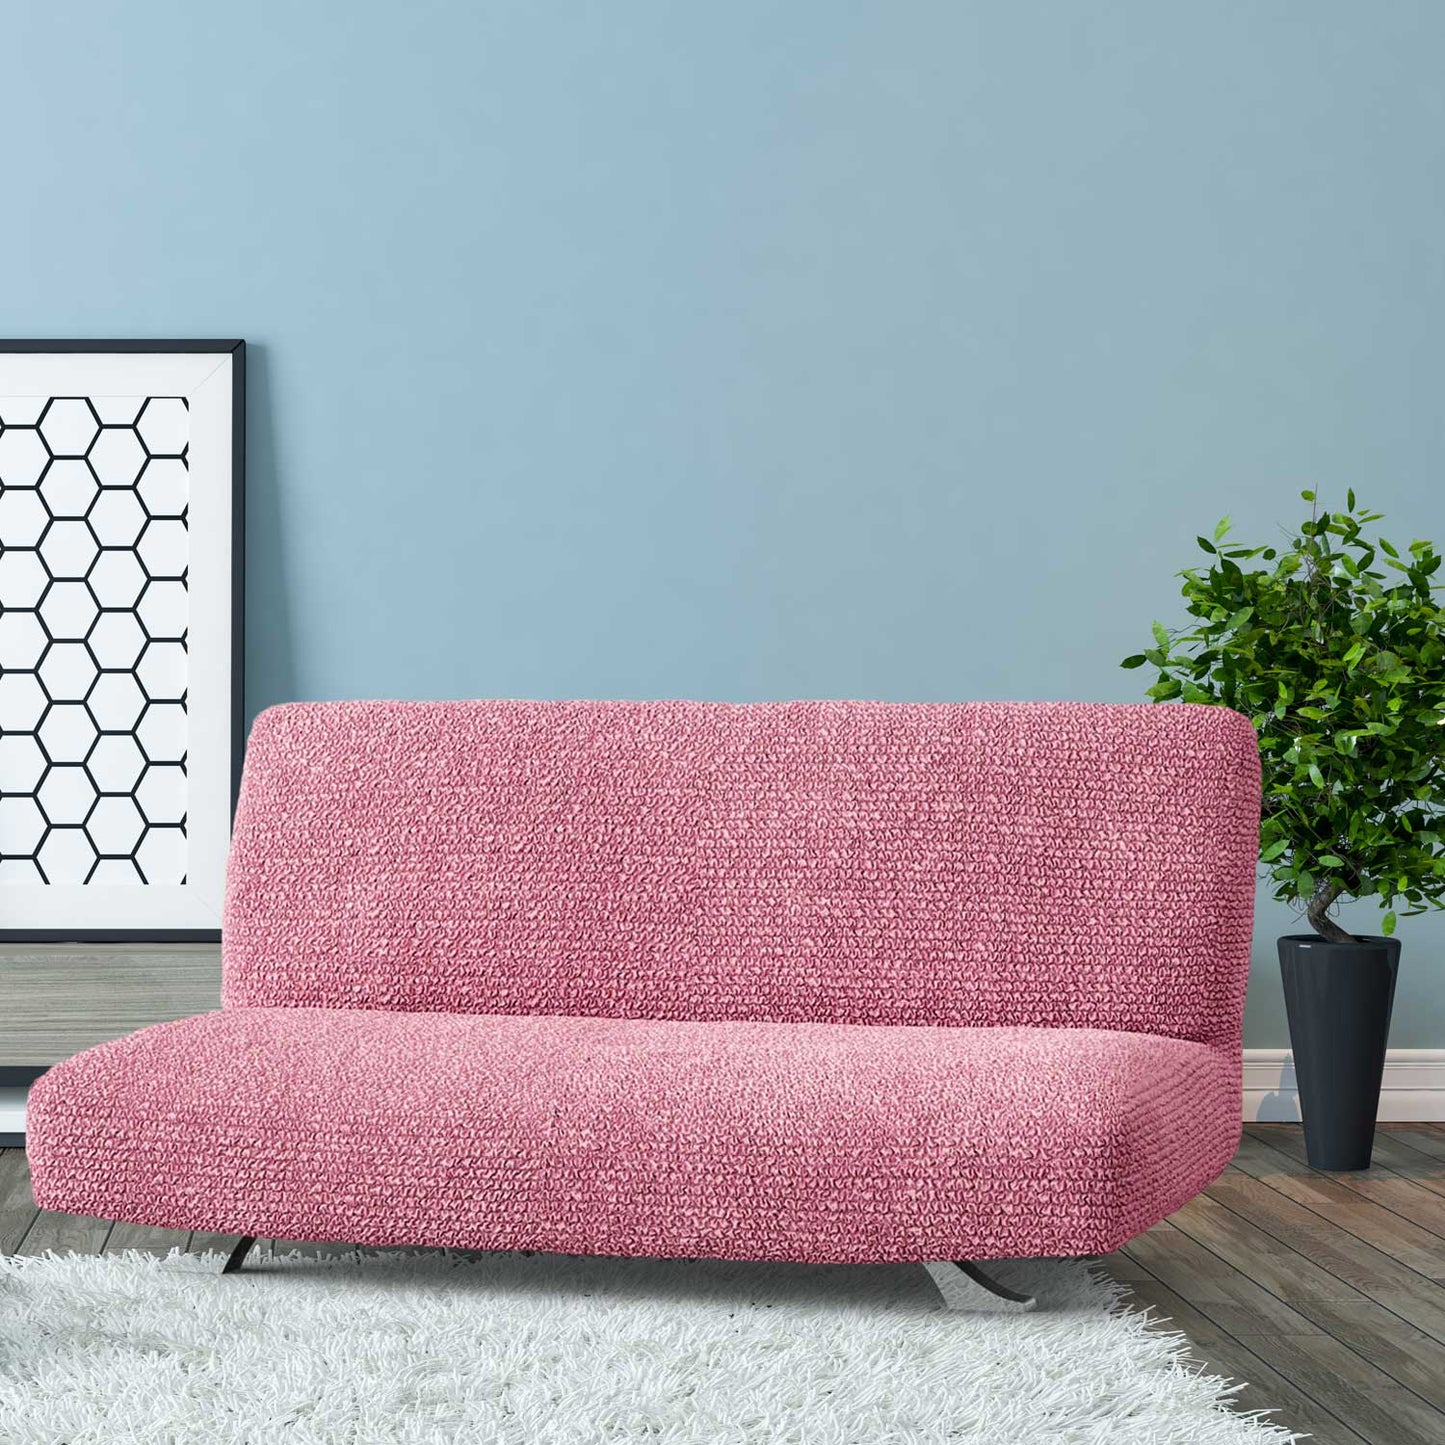 Futon Armless Sofa Bed Slipcover - Pink, Microfibra